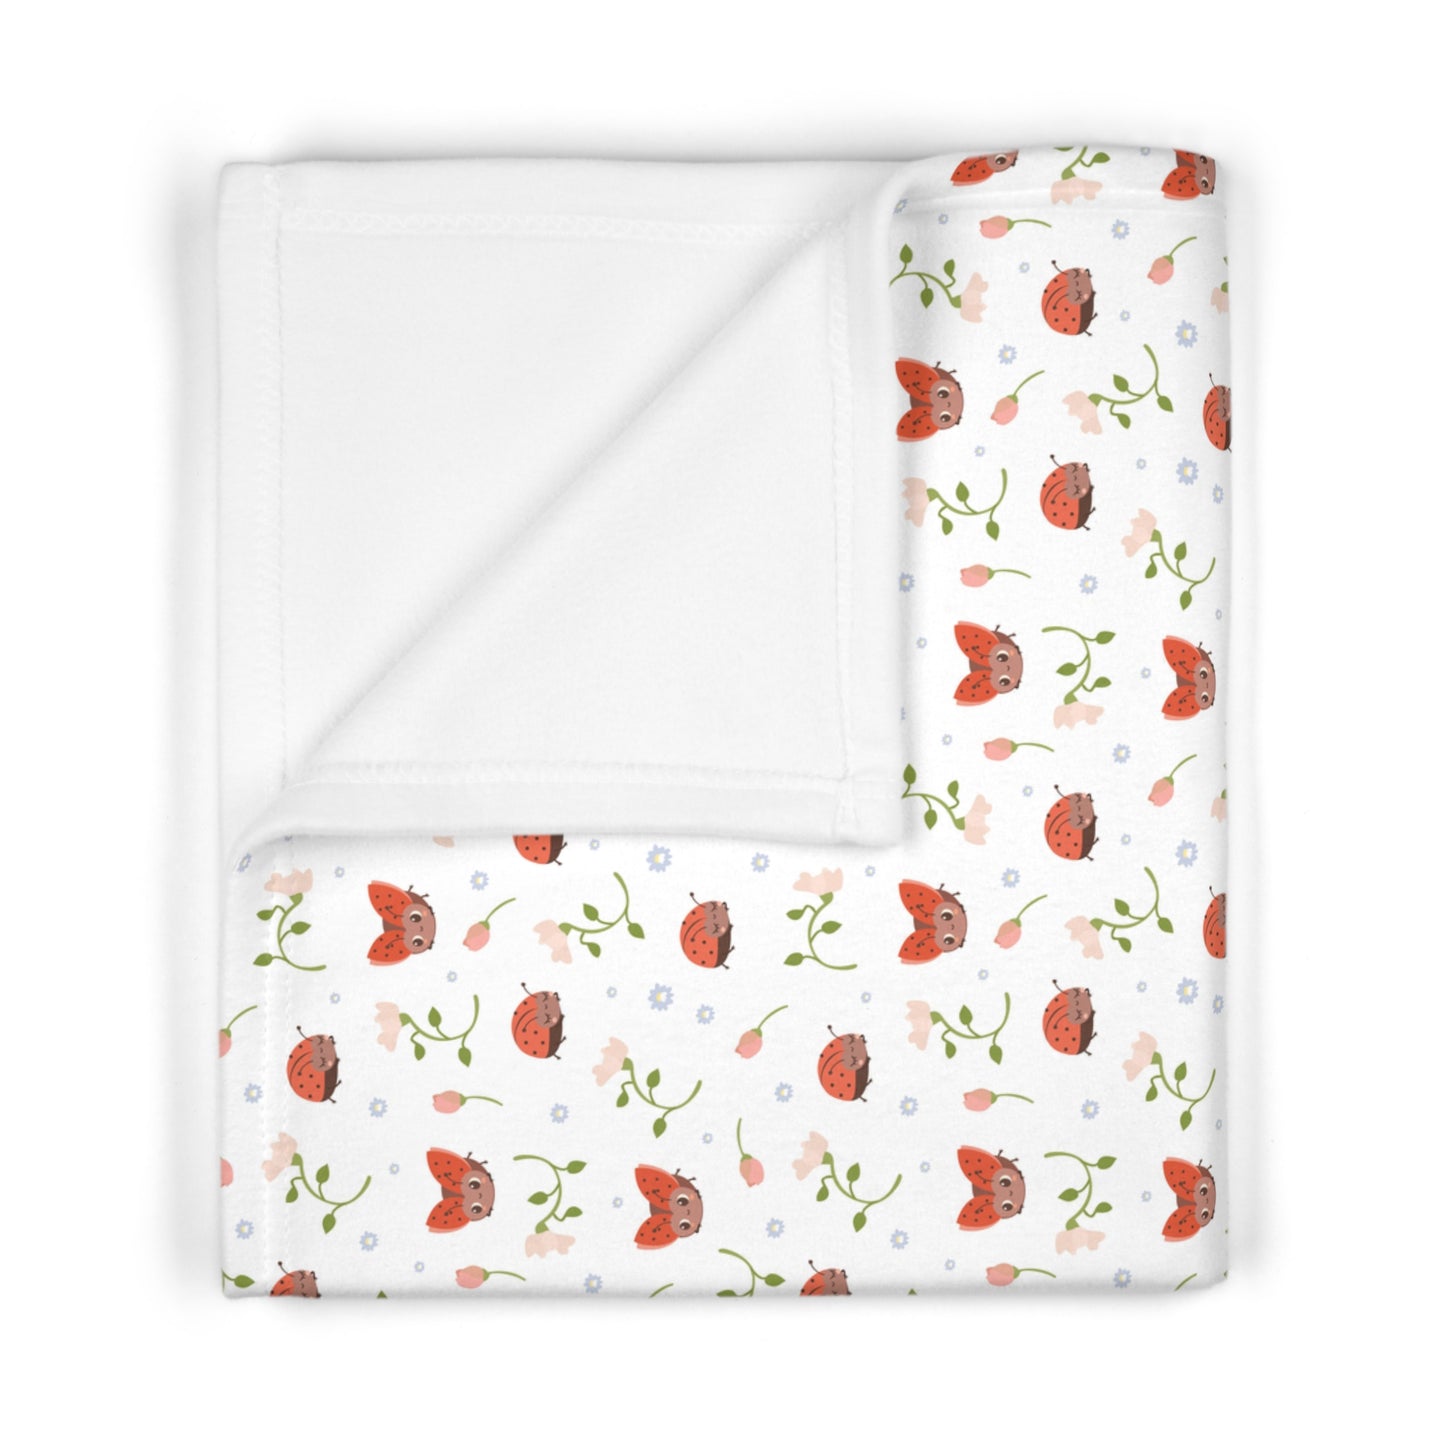 Niccie's Flower and Ladybug Pattern Fleece Baby Blanket